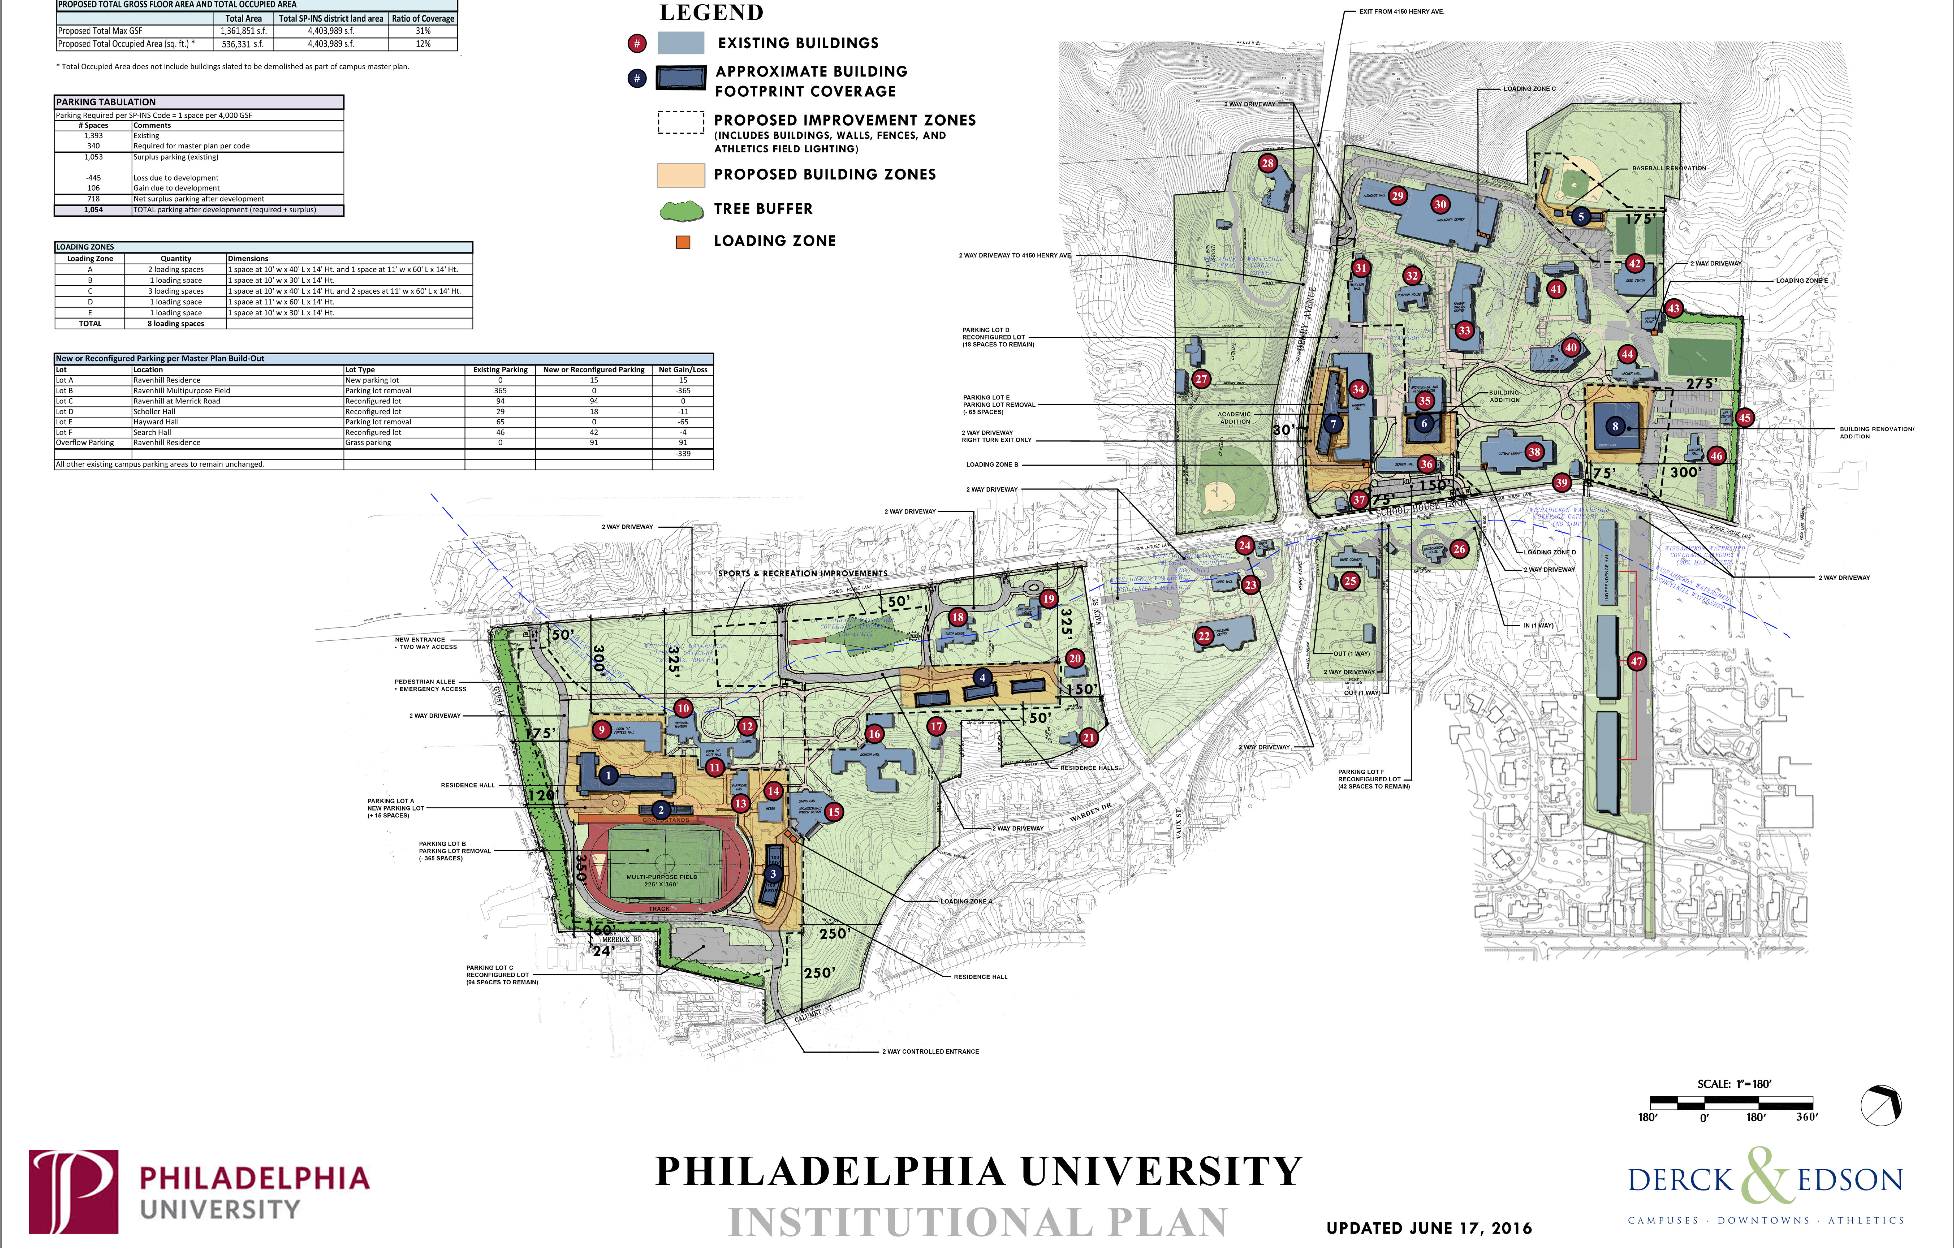 Philadelphia University - Institutional Plan | CDR presentation, July 2016